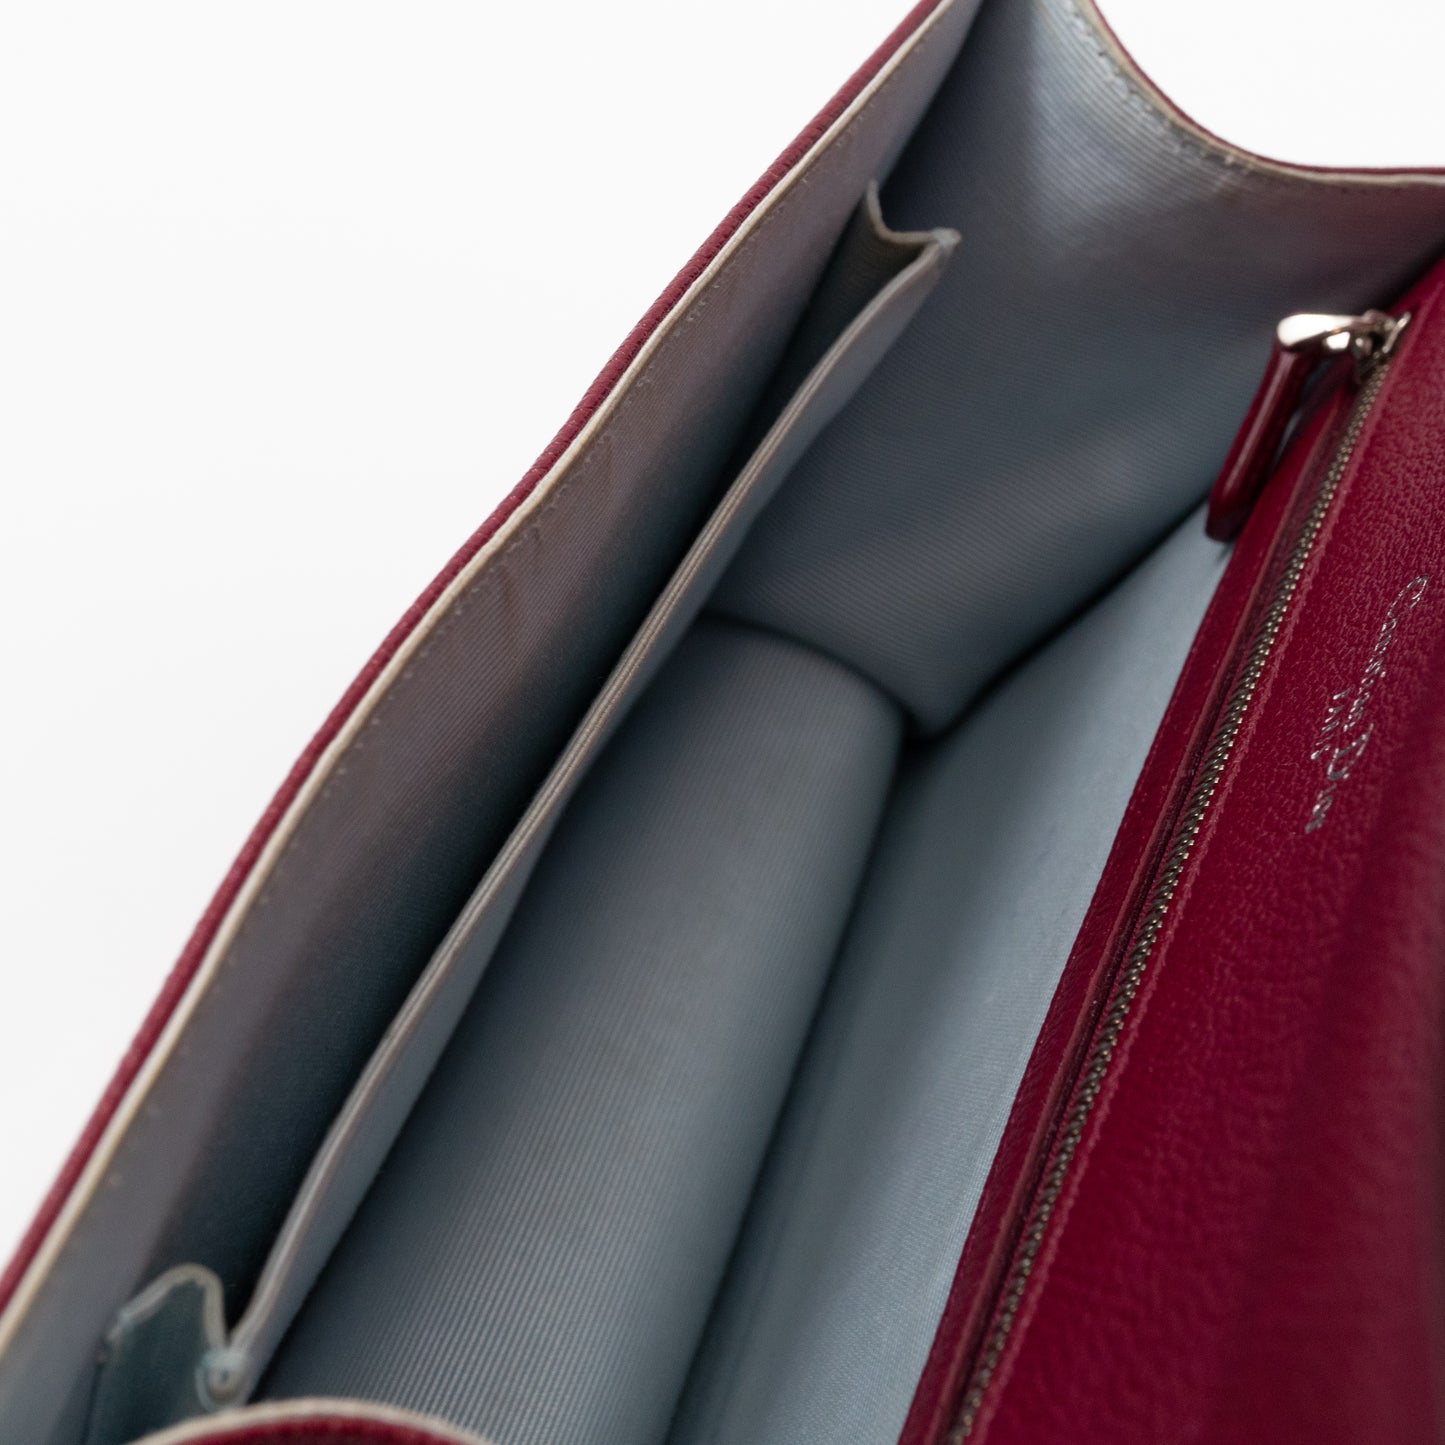 Diorama Medium Flap Bag Burgundy Leather